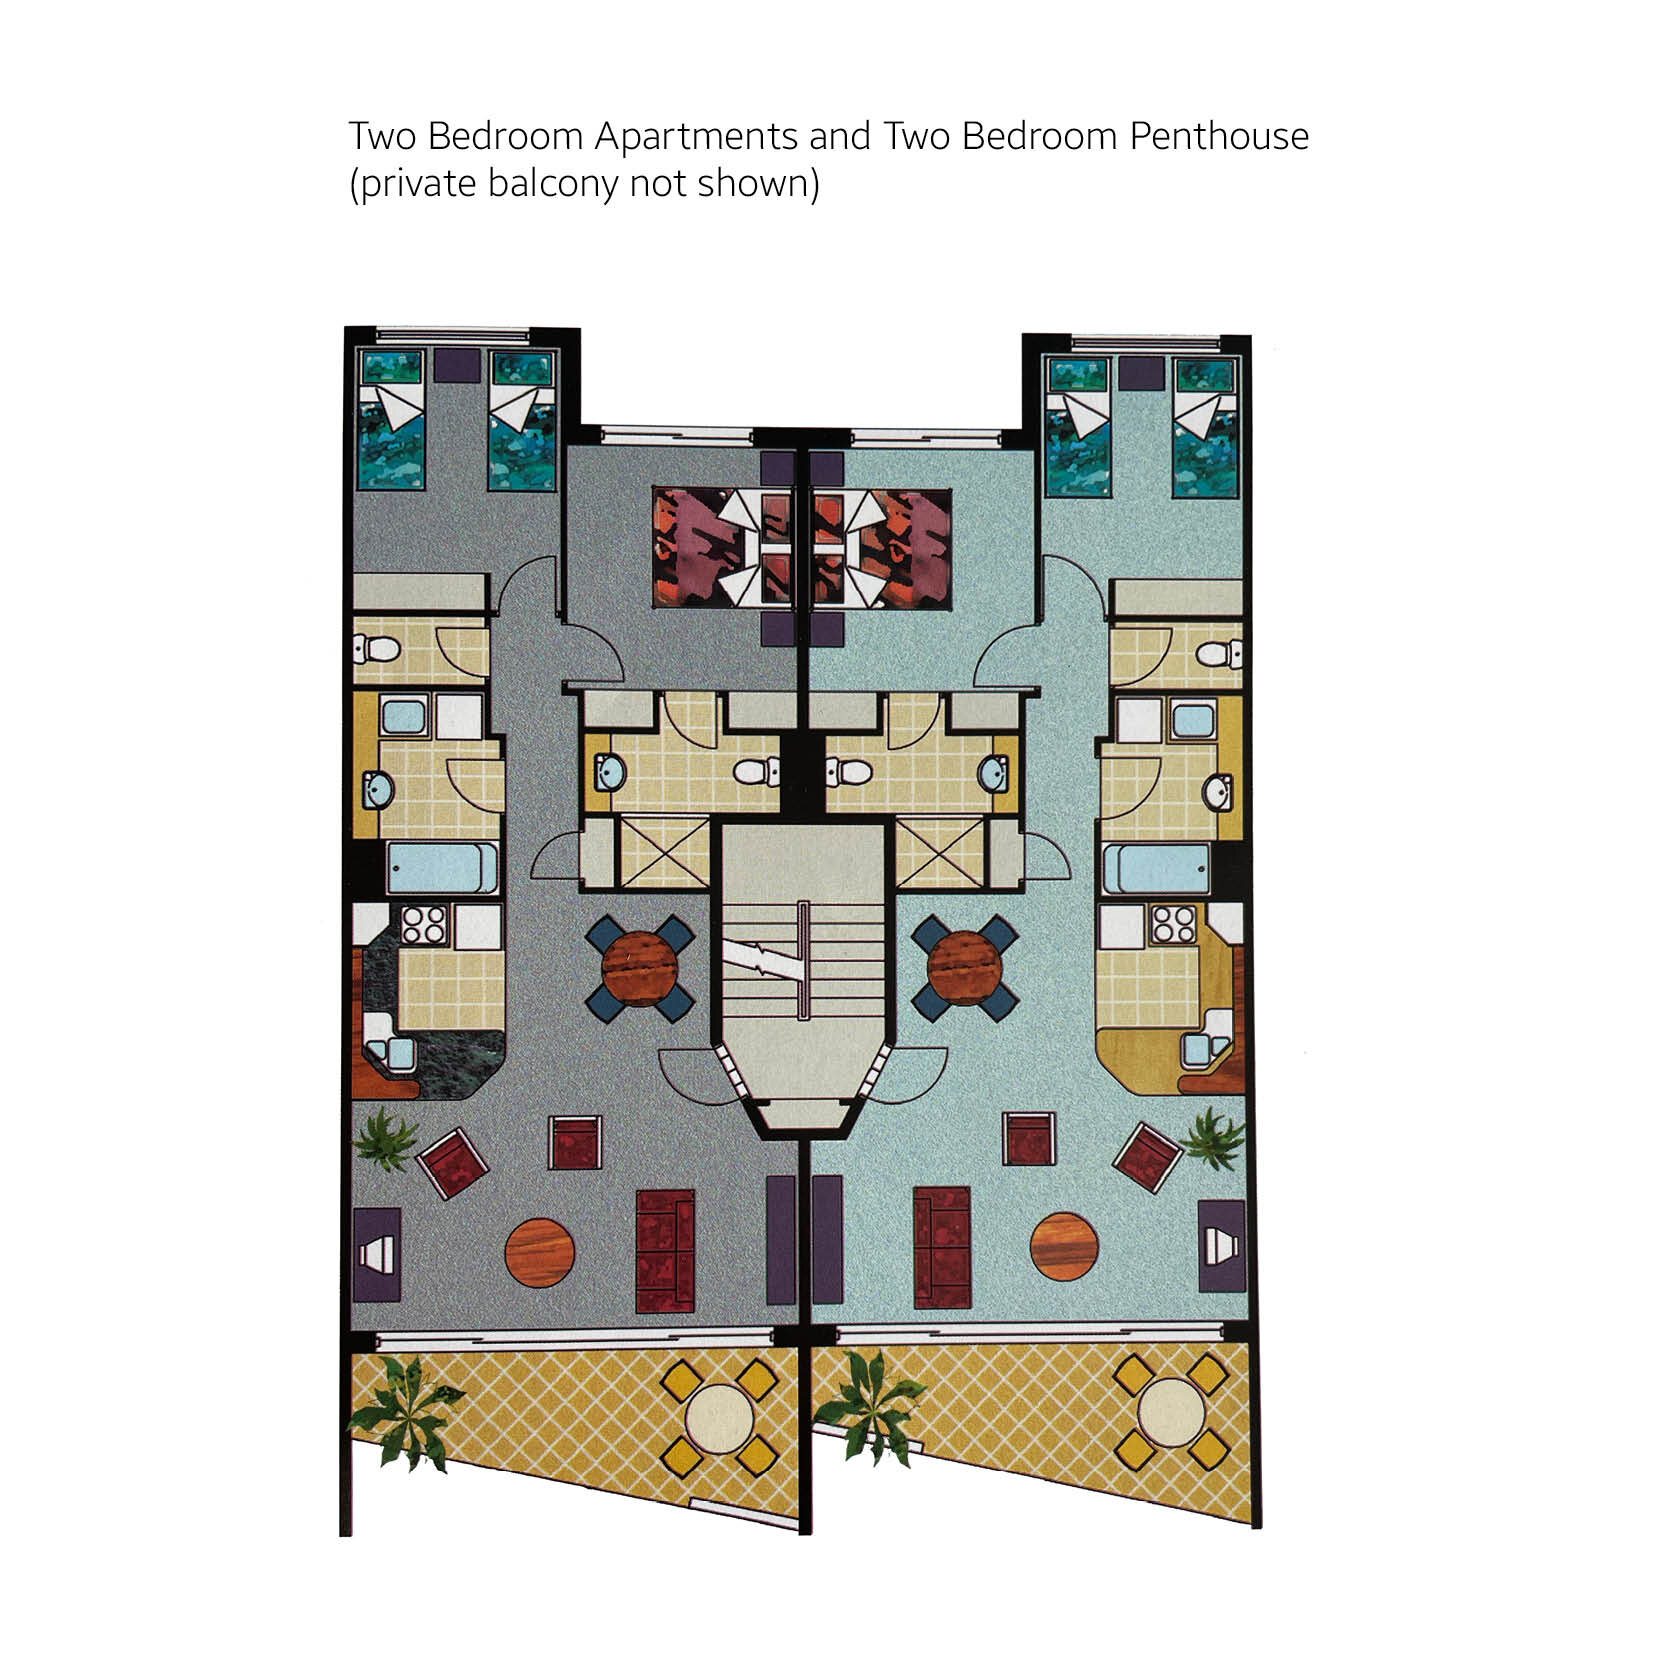 Kings Bay Apartments plans2.jpg